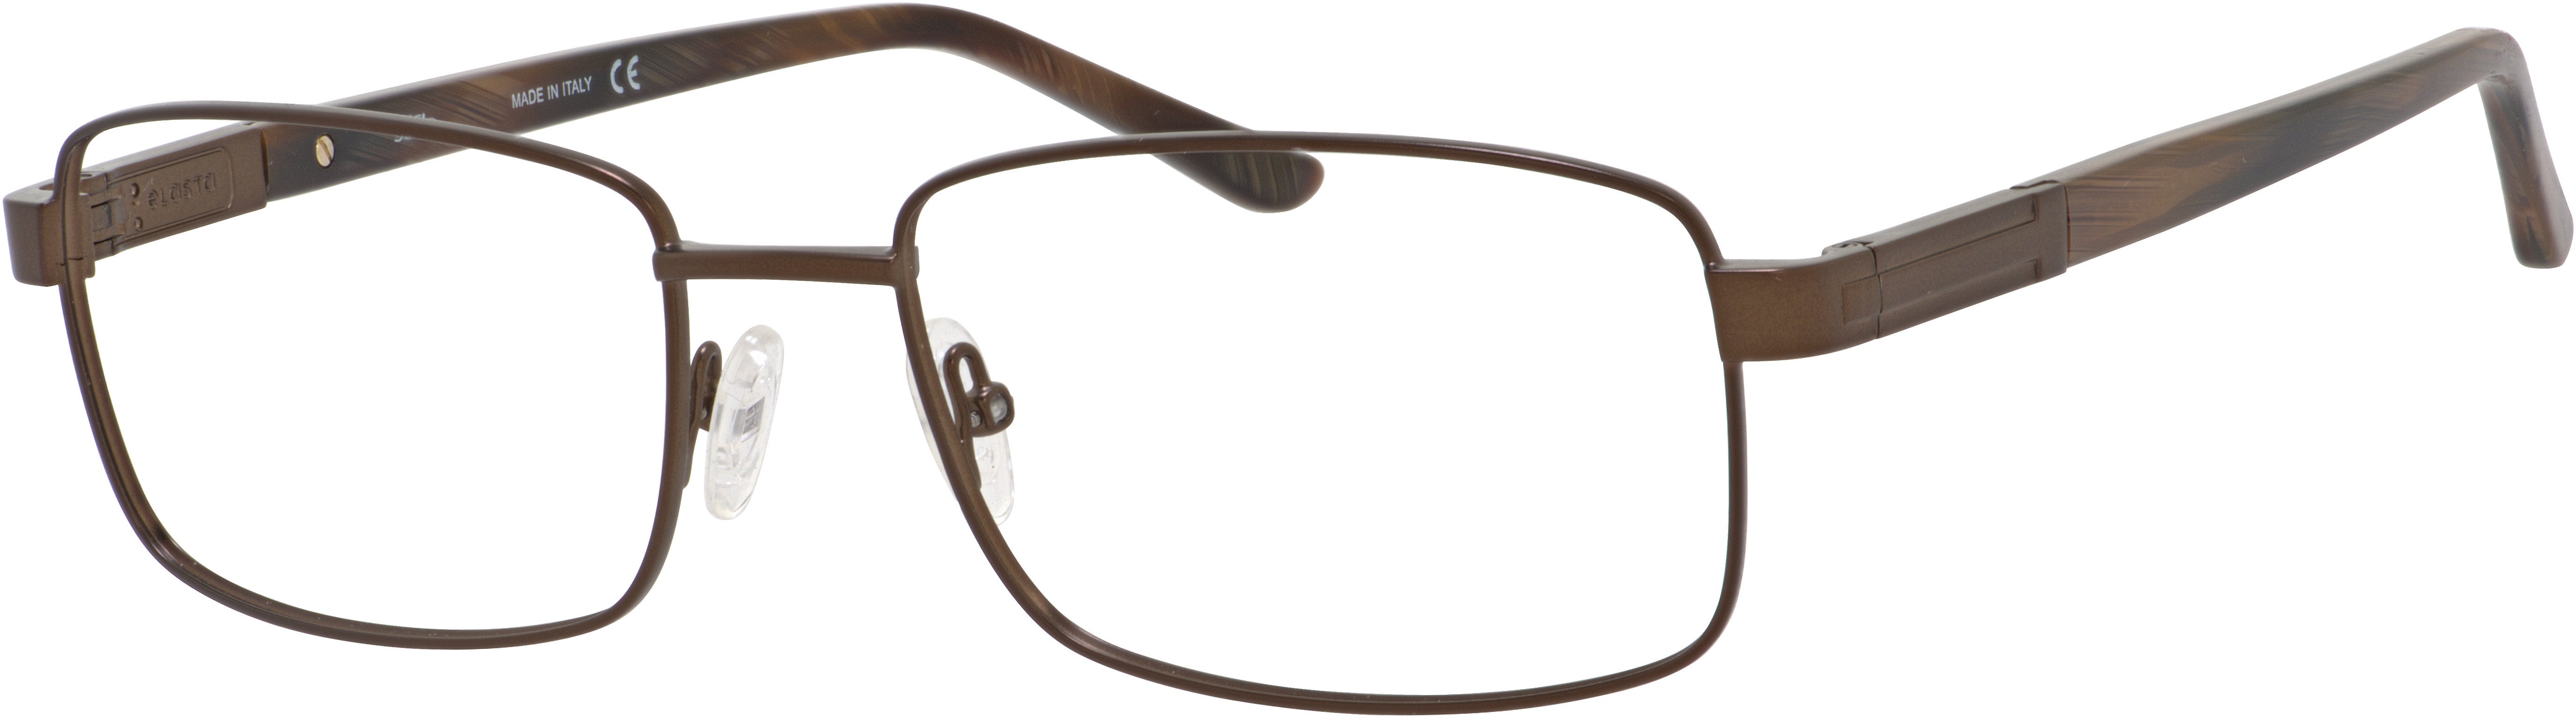  Elasta 3118 Rectangular Eyeglasses 009Q-009Q  Brown (00 Demo Lens)